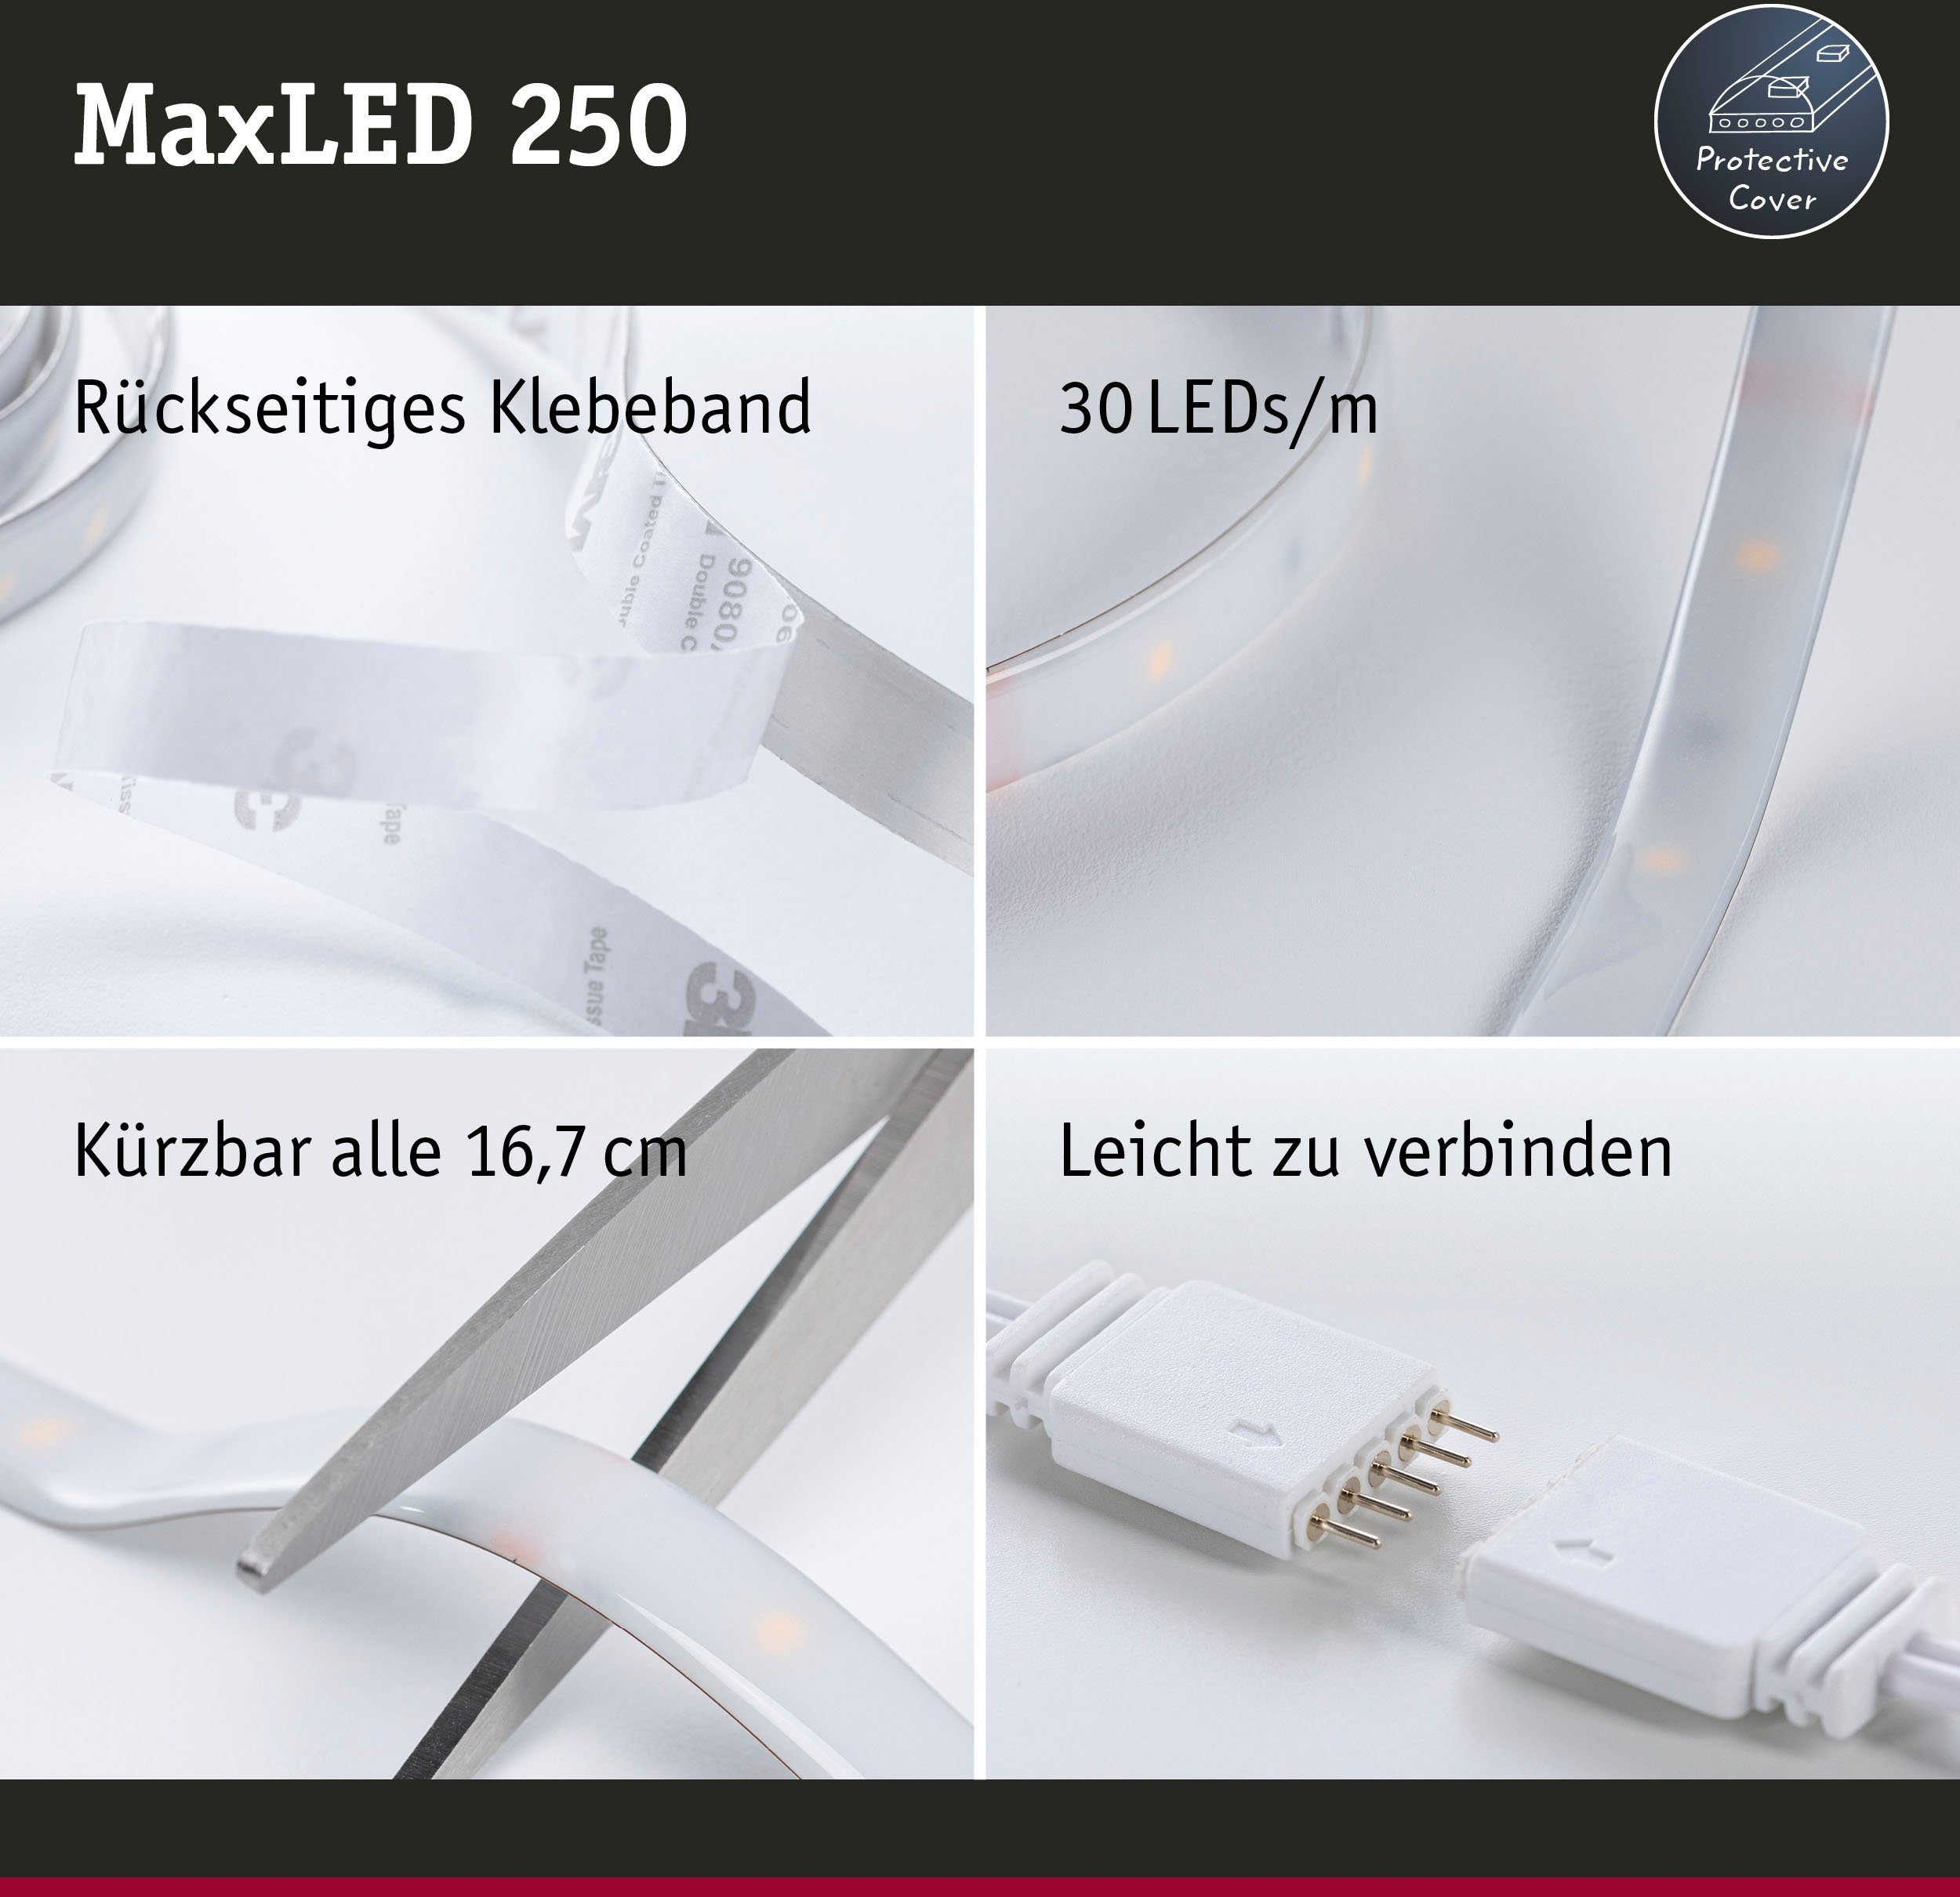 RGBW, MaxLED Smart beschichtet 1-flammig, Basisset 5m, Home 1000lm, Paulmann Zigbee 250 100 22W LED-Streifen IP44